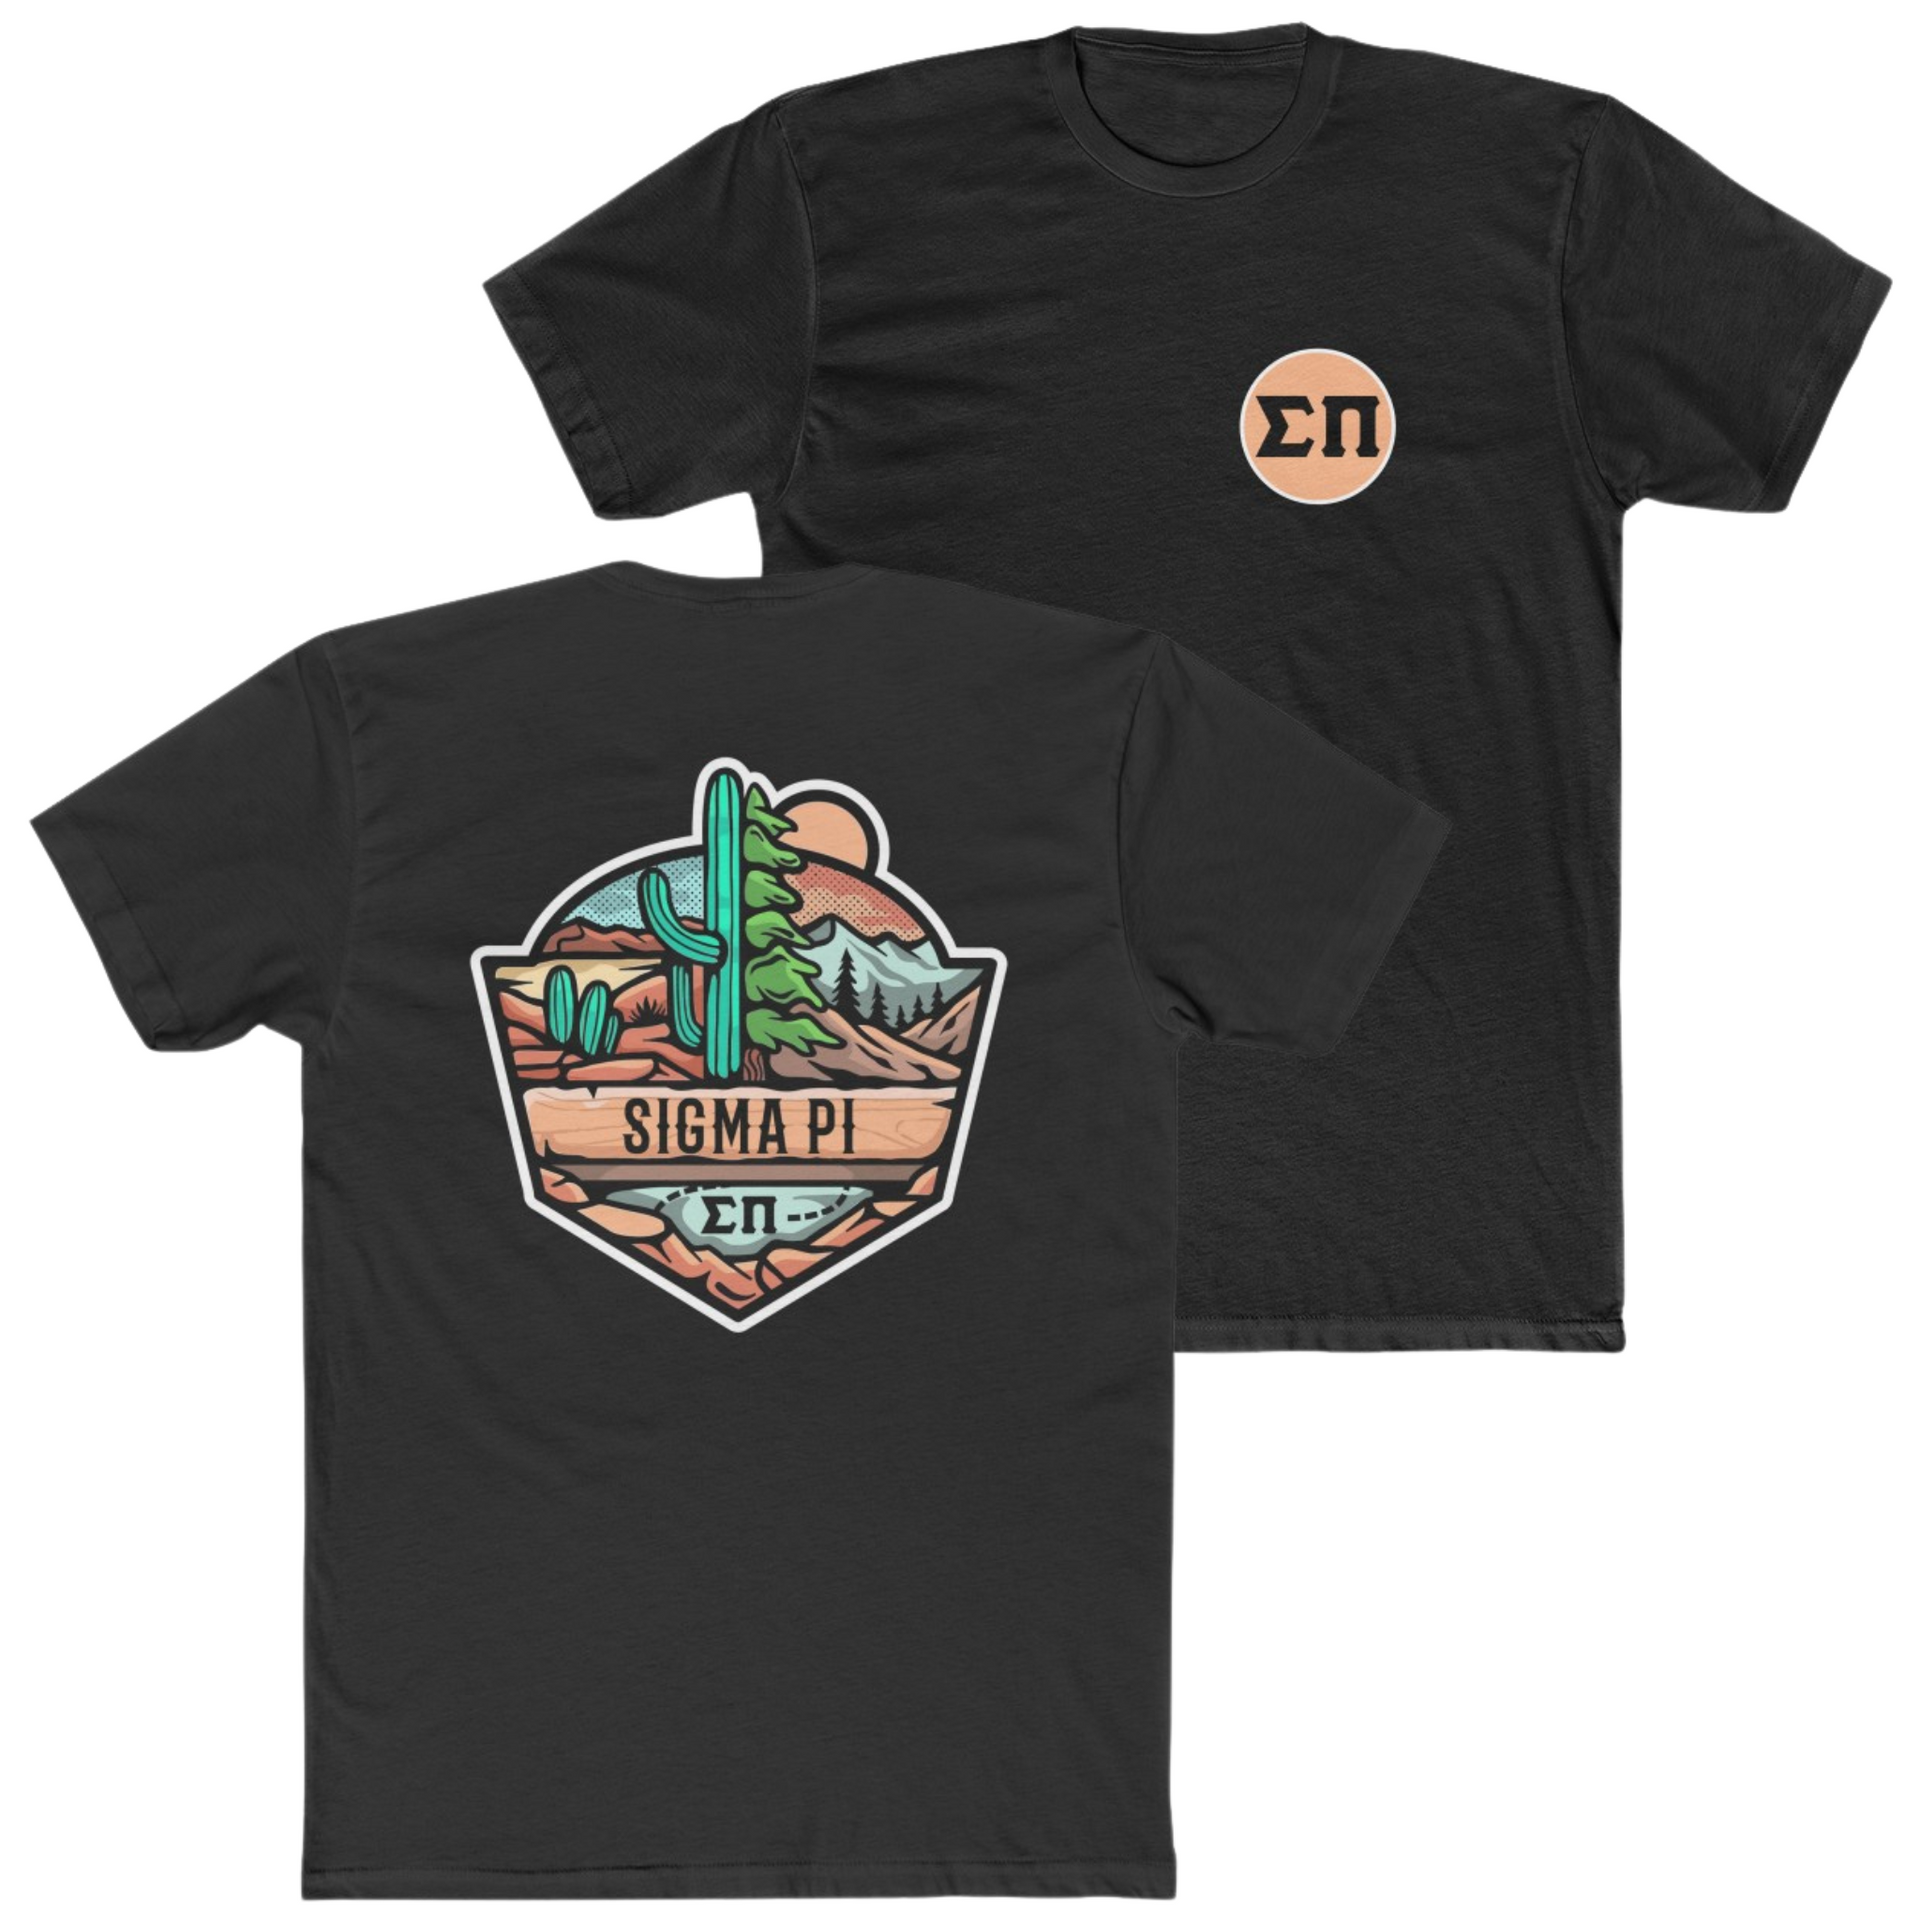 Black Sigma Pi Graphic T-Shirt | Desert Mountains | Sigma Pi Apparel and Merchandise